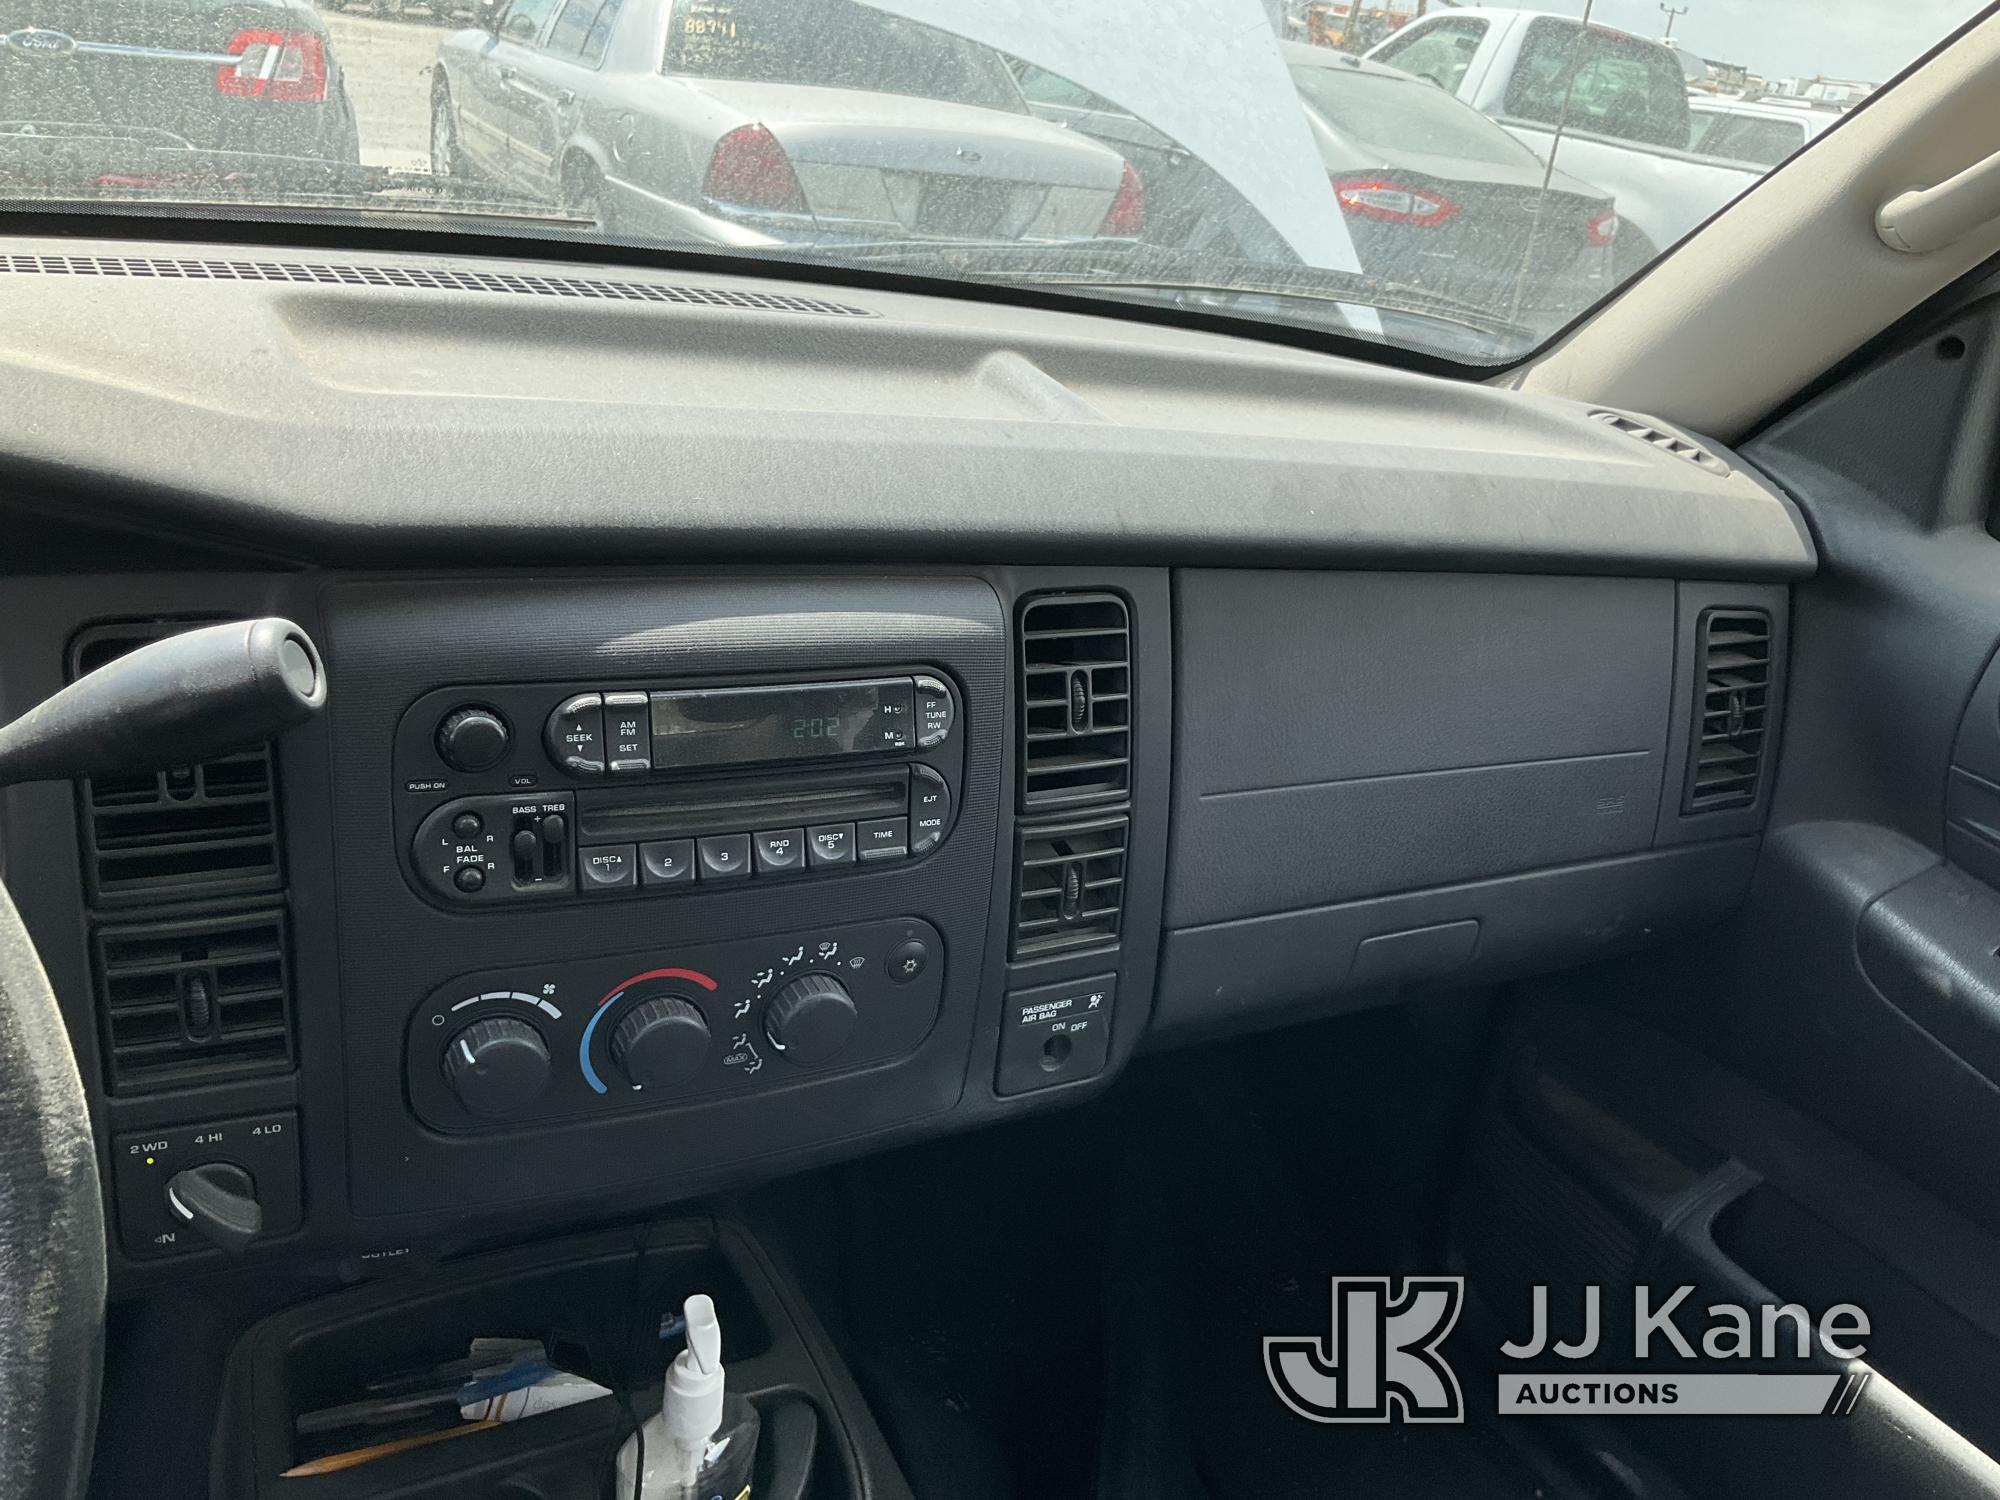 (Jurupa Valley, CA) 2002 Dodge Dakota Extended-Cab Pickup Truck Cranks Does Not Start, Has ABS Light